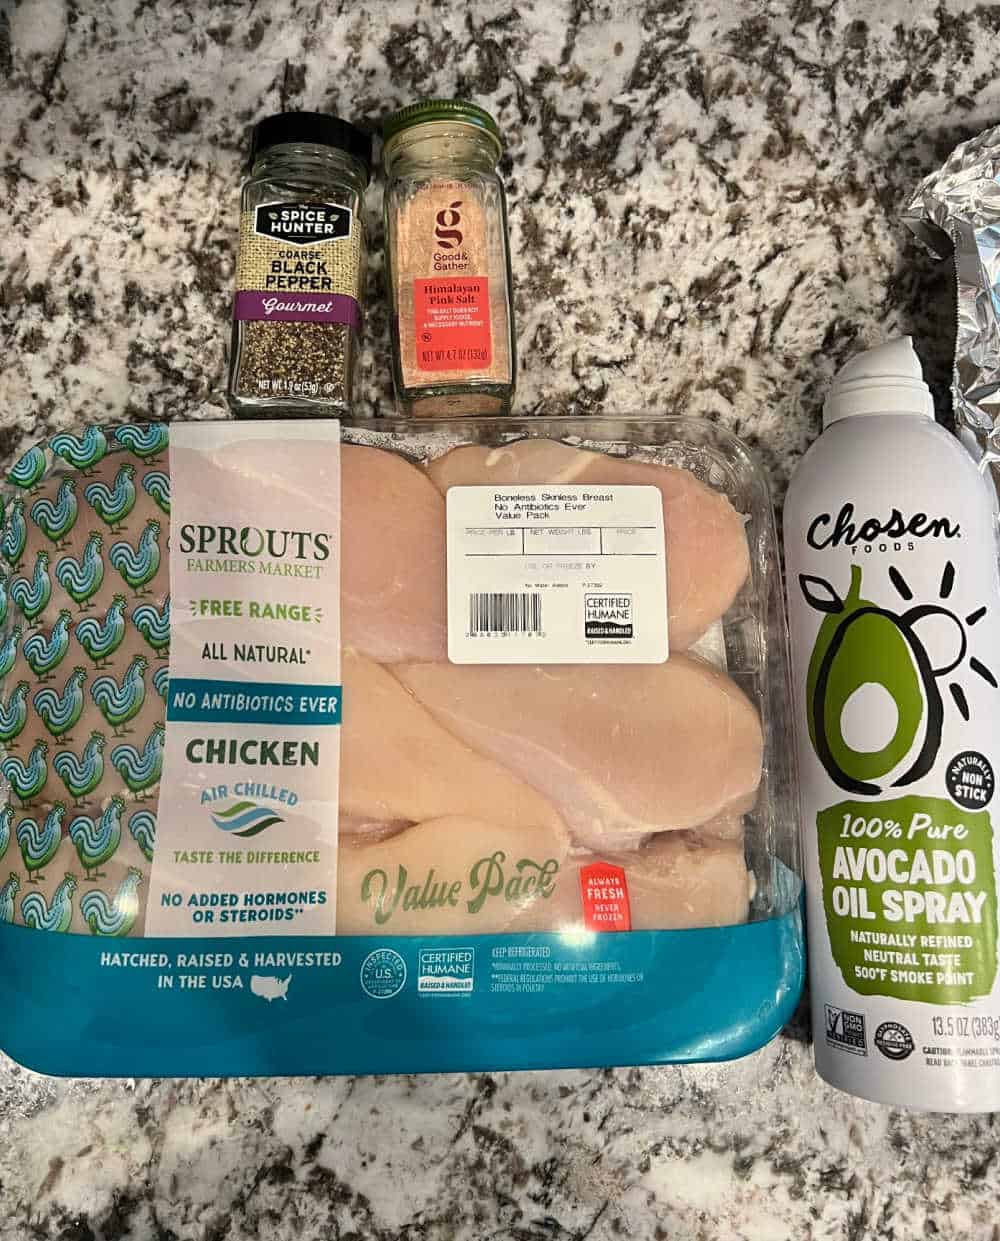 boneless chicken breast, avocado oil, salt, pepper.